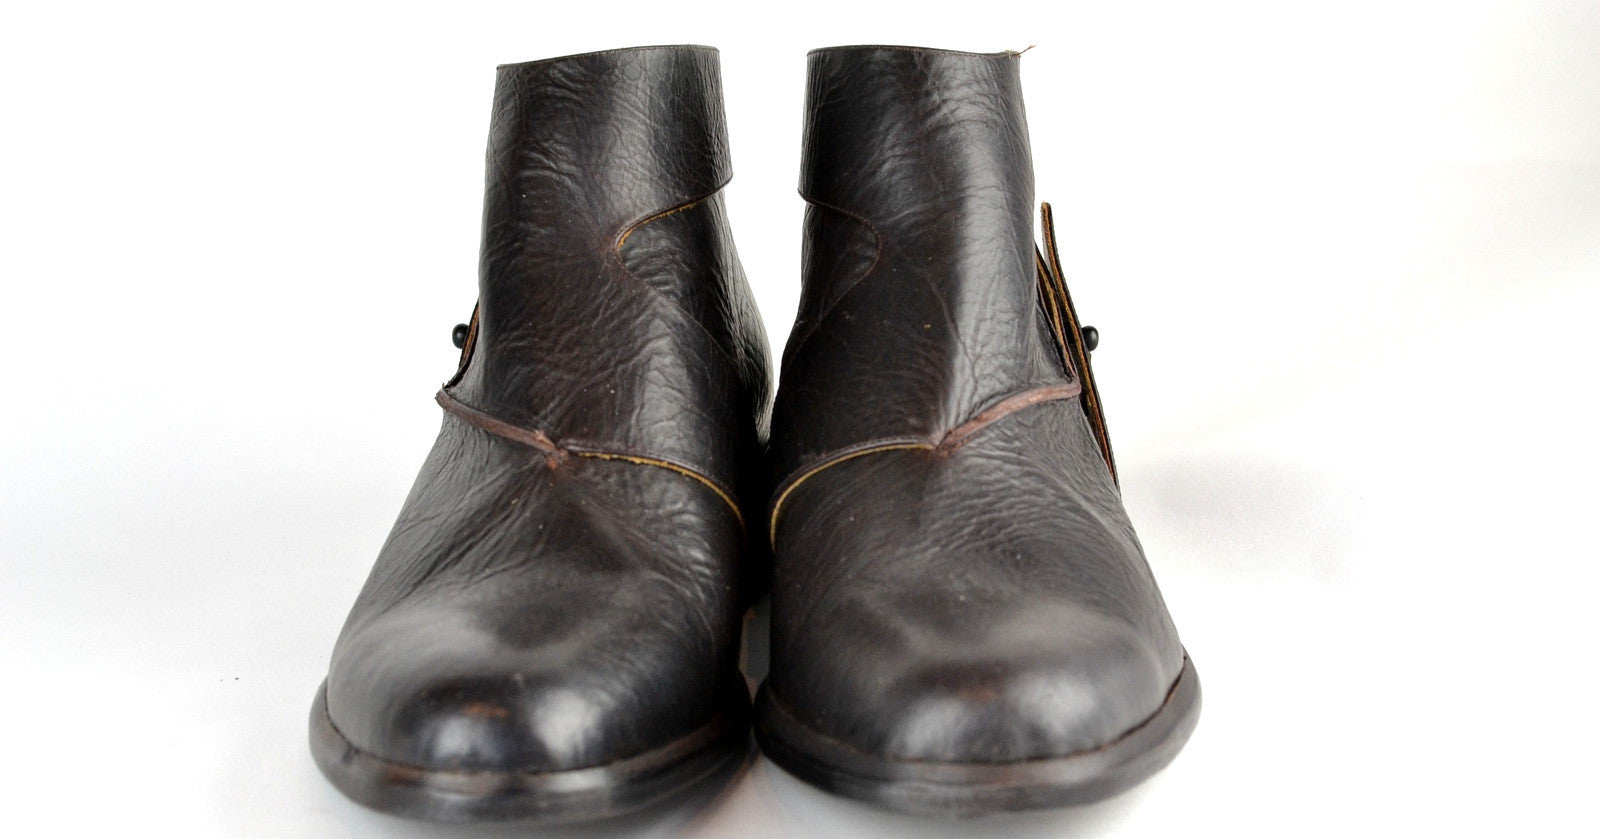 Men's Shoes & Boots Hand Made in Australia - A. McDonald Shoemaker